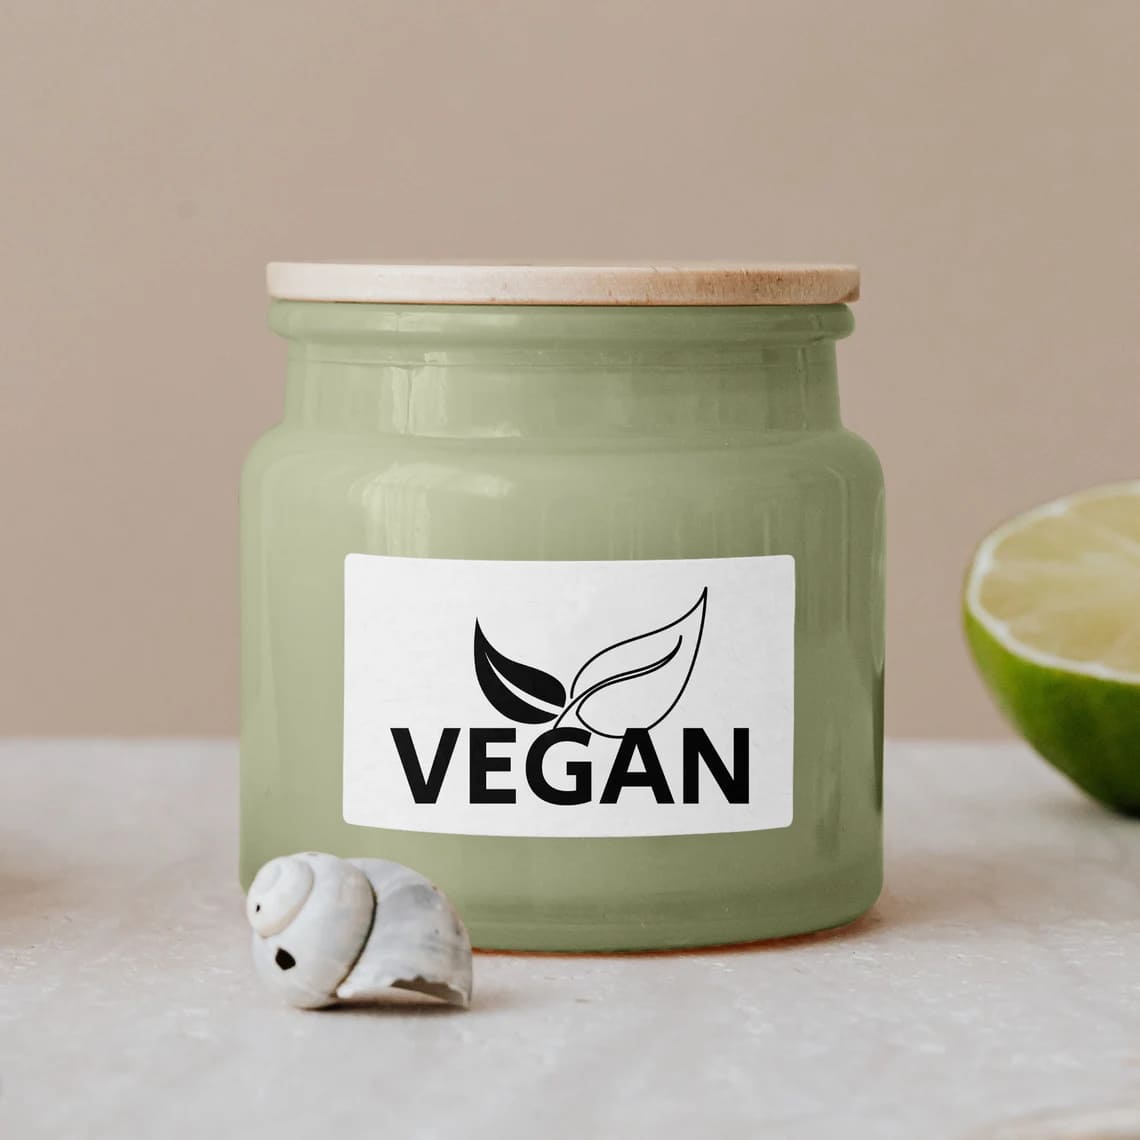 Vegan is written on the green cosmetic jar.